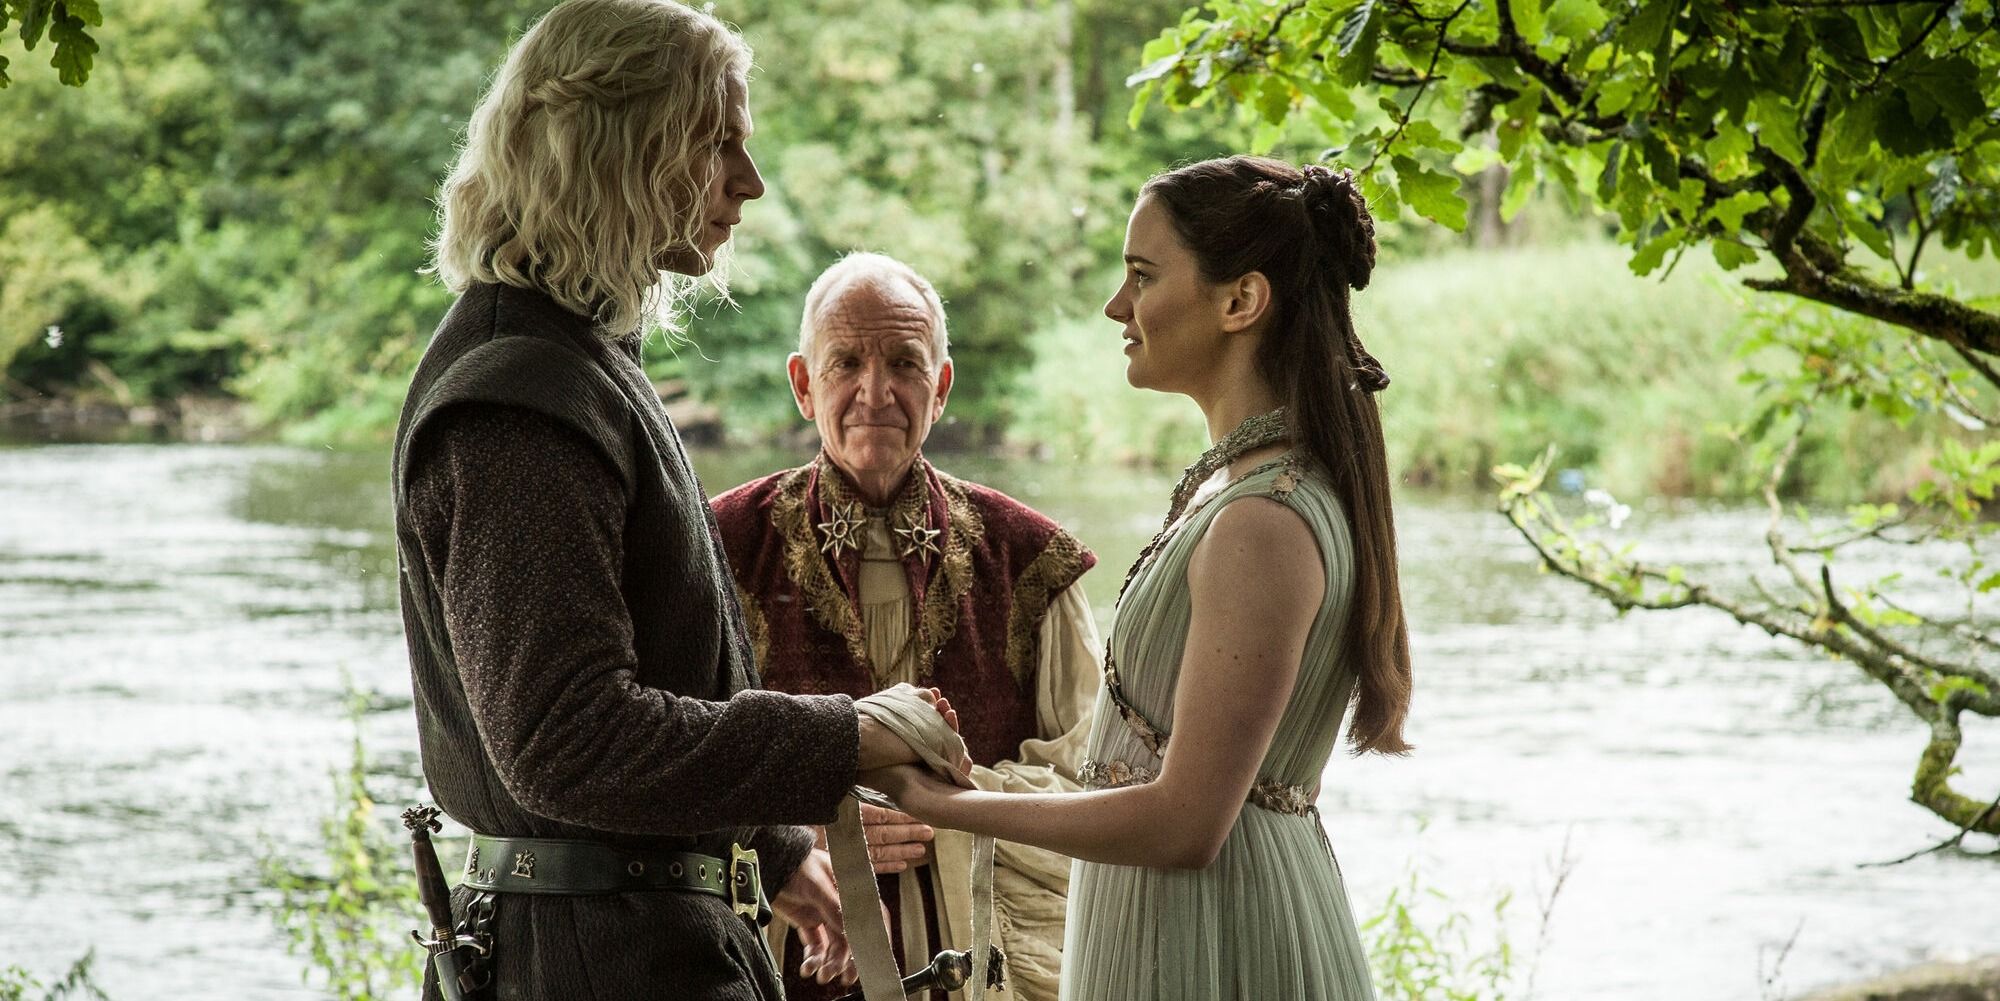 Rhaegar and Lyanna getting married in Game of Thrones